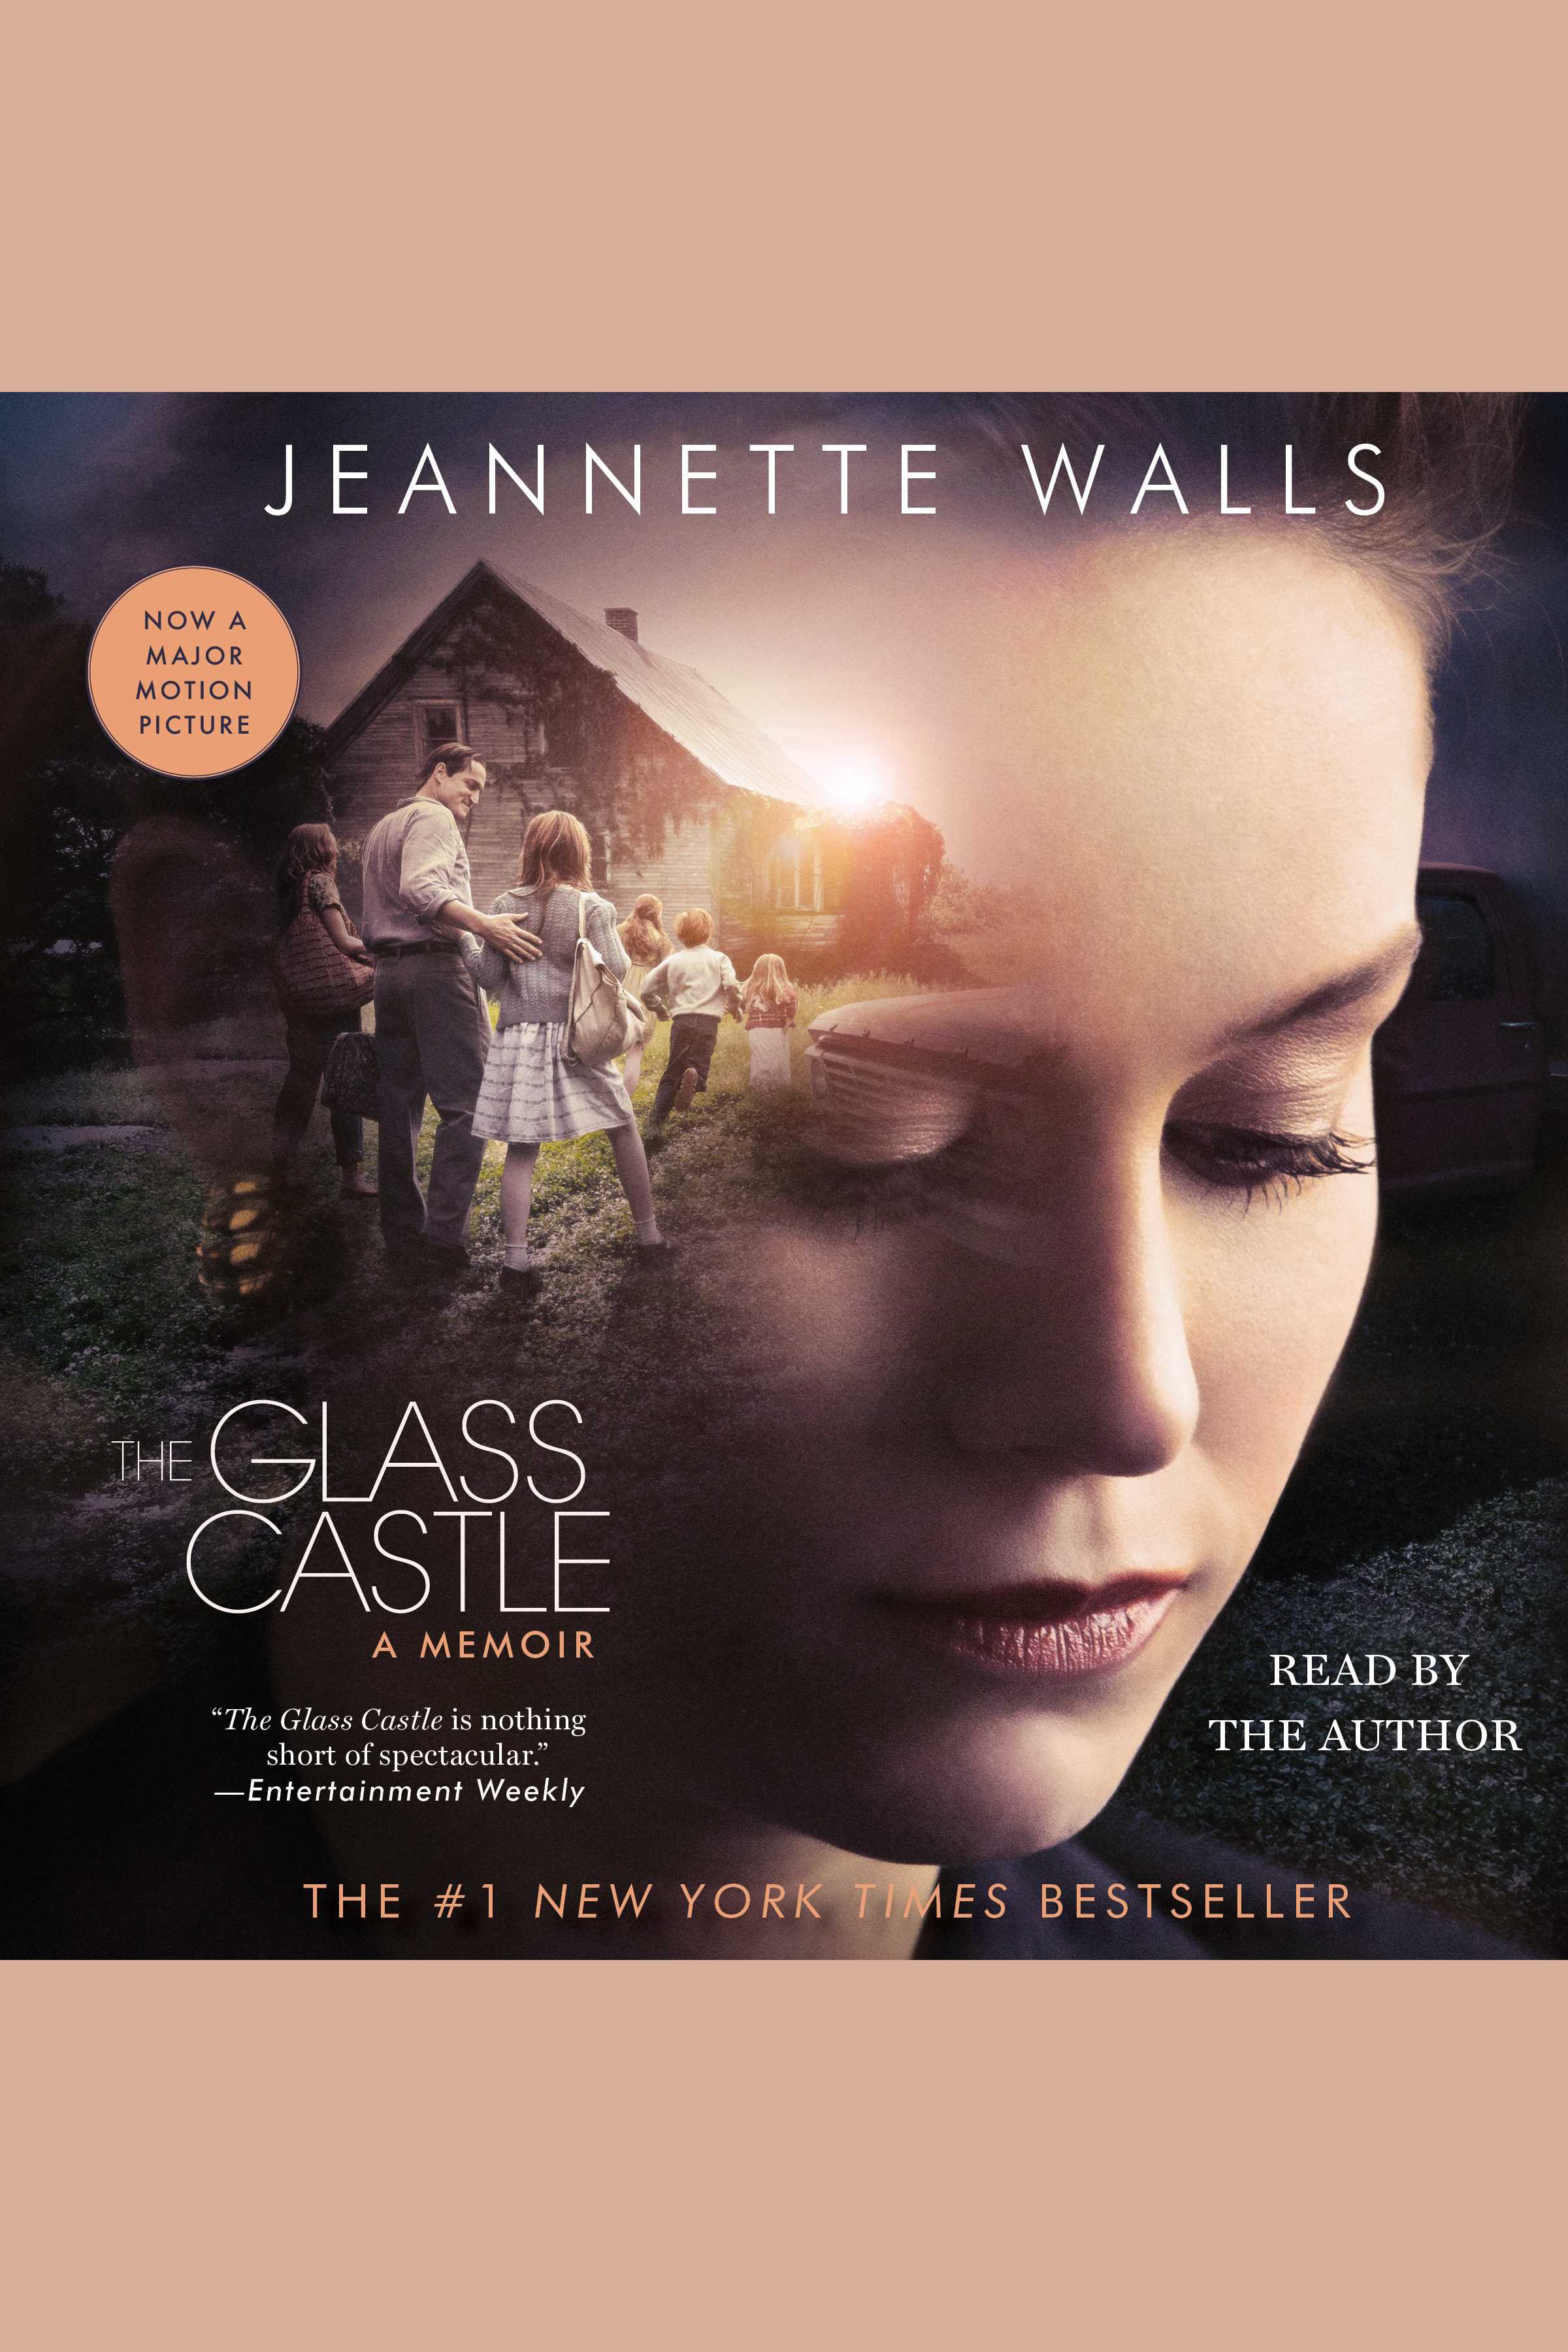 The glass castle A Memoir cover image